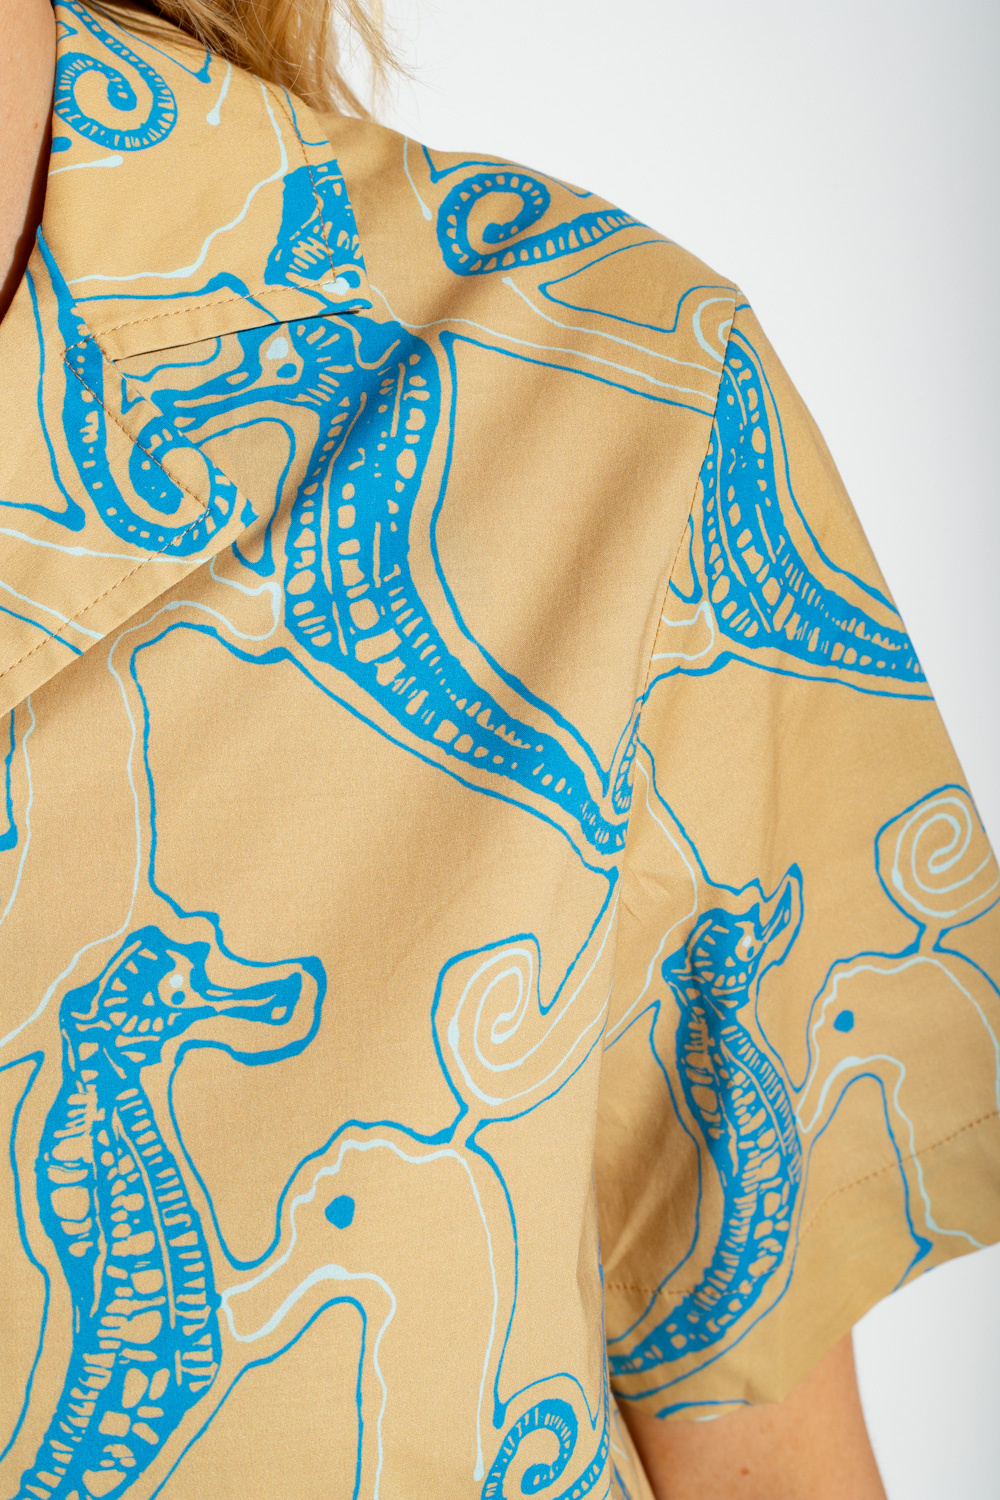 Samsøe Samsøe ‘Malene’ patterned shirt